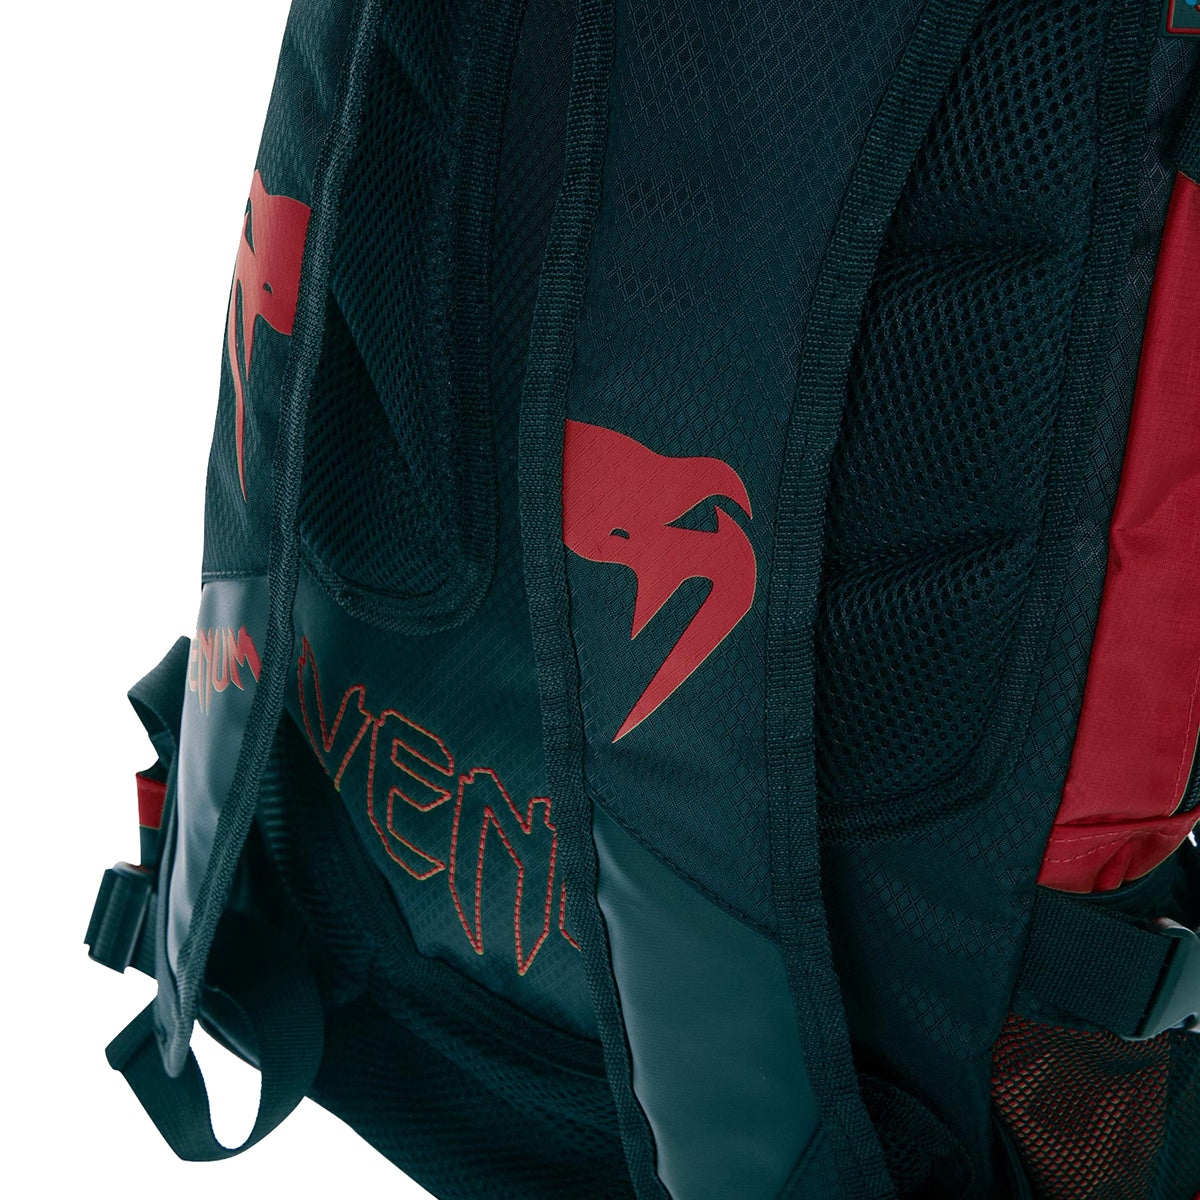 Venum Challenger Pro Backpack - Red Venum